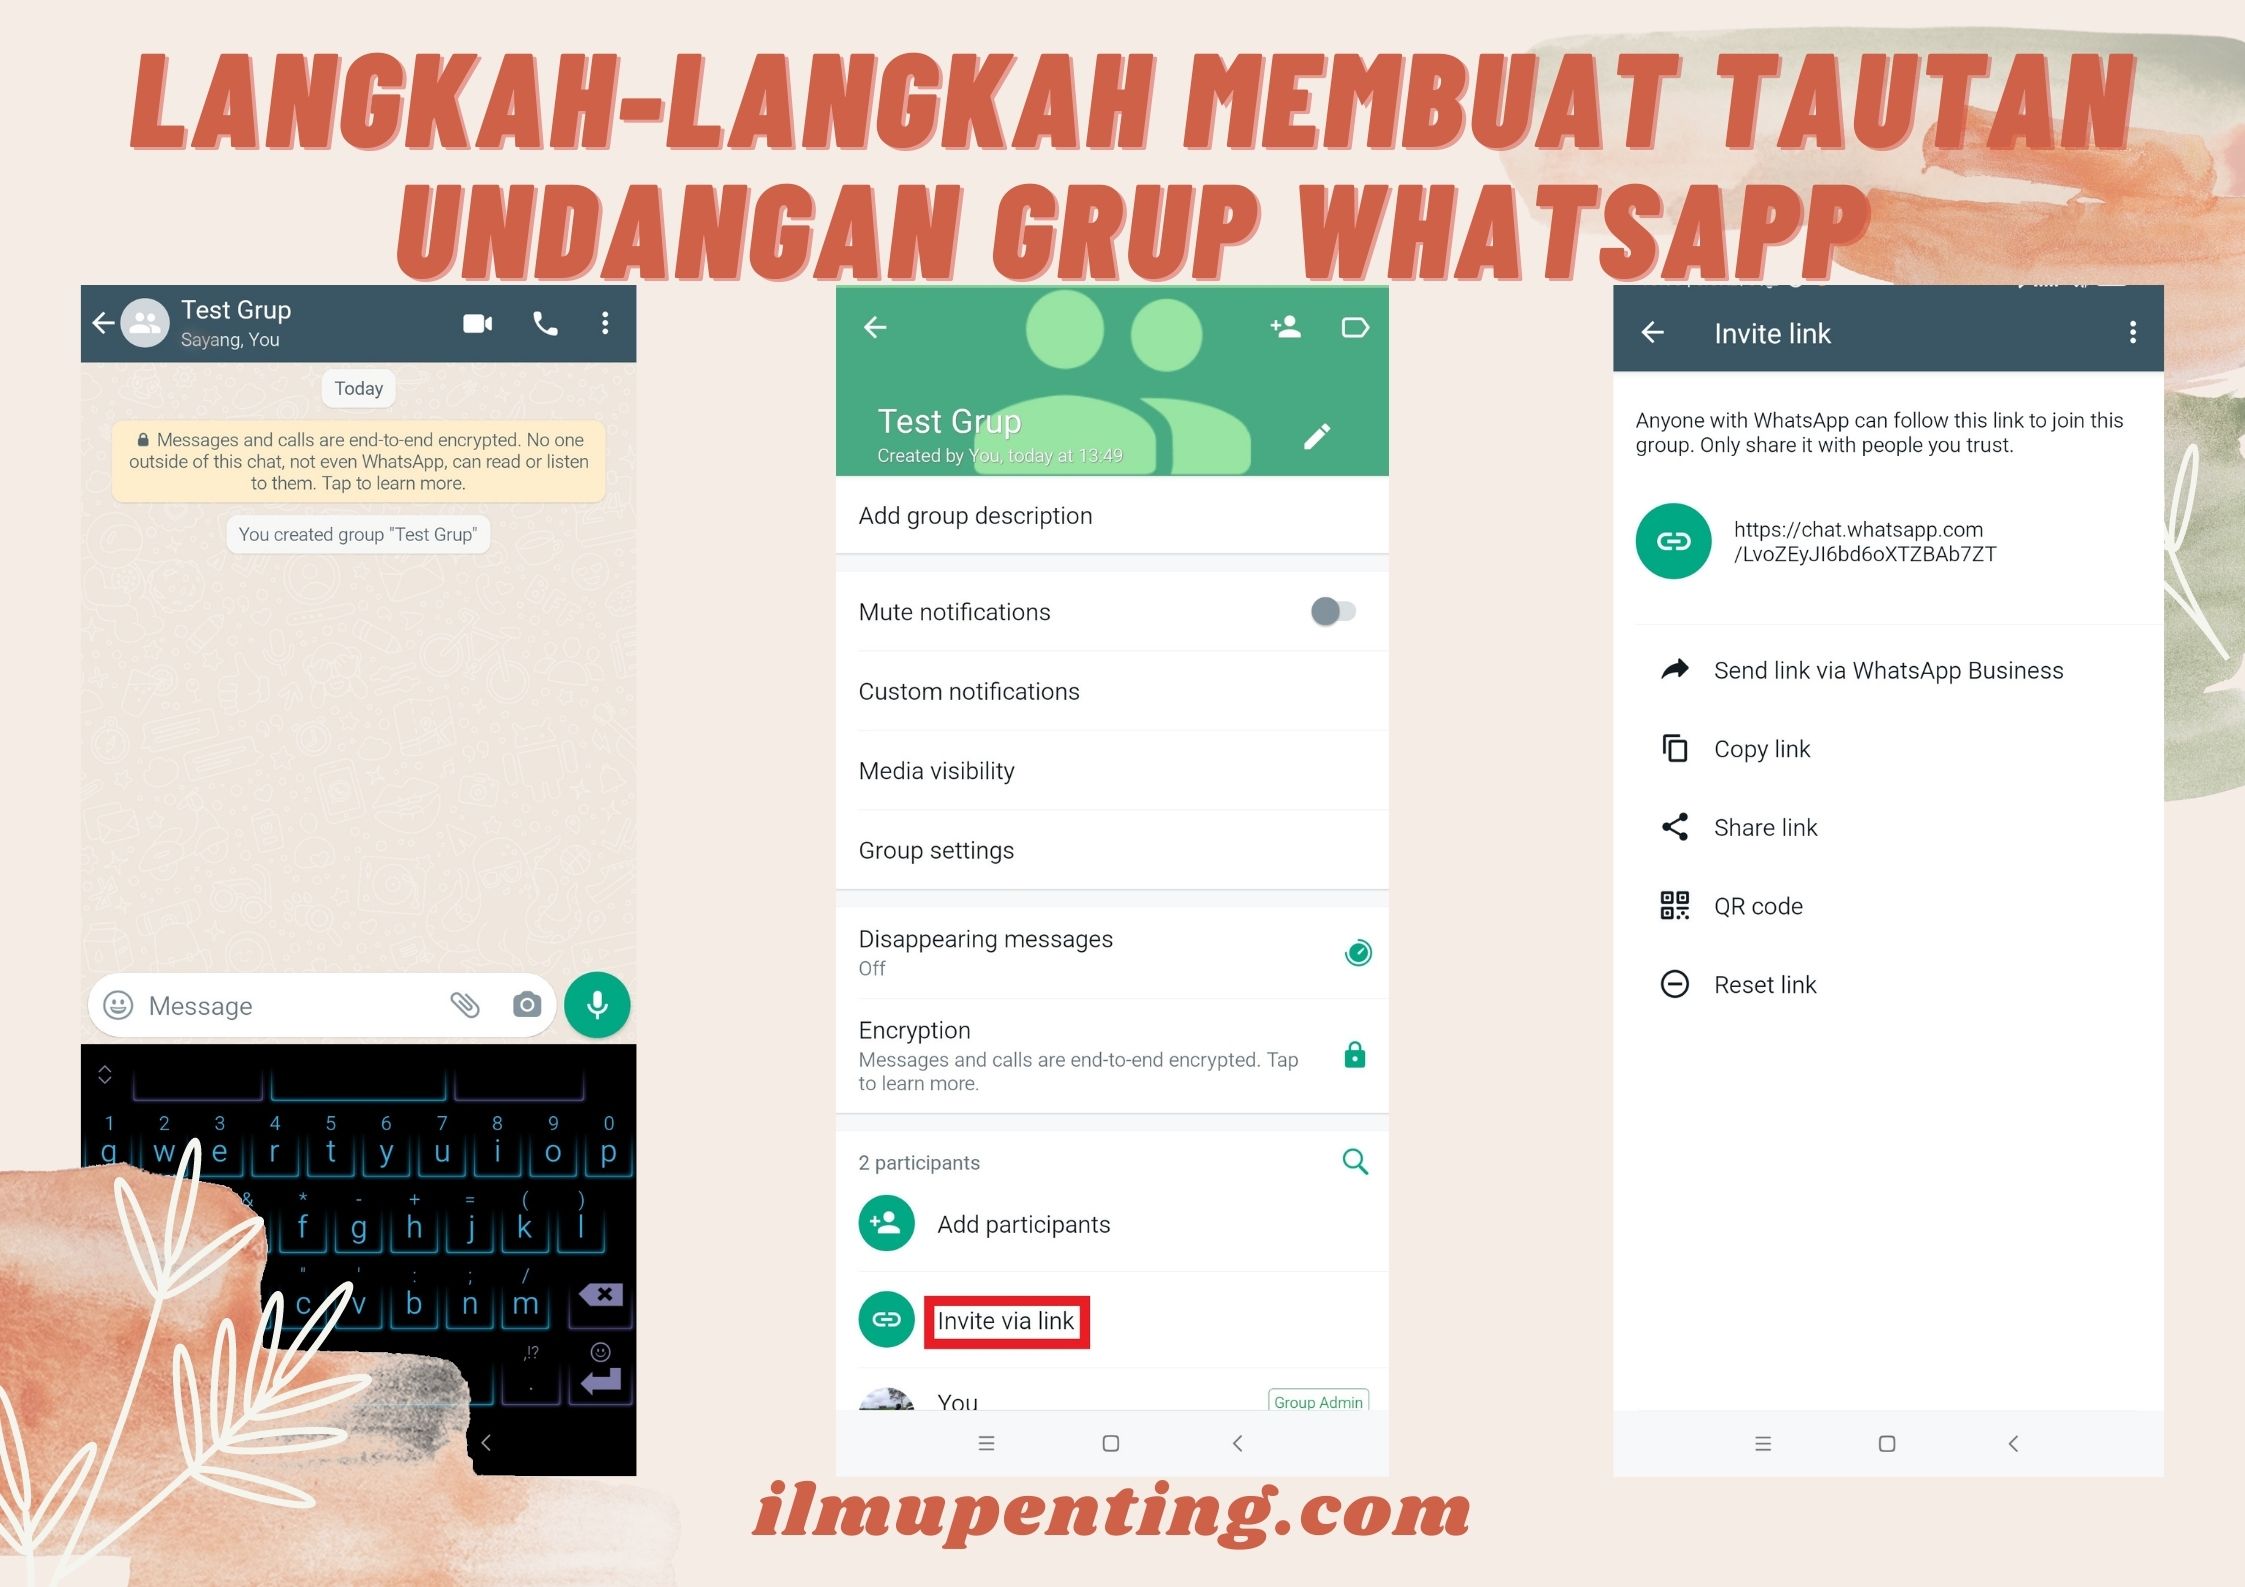 Langkah-langkah Membuat Tautan Undangan Grup WhatsApp